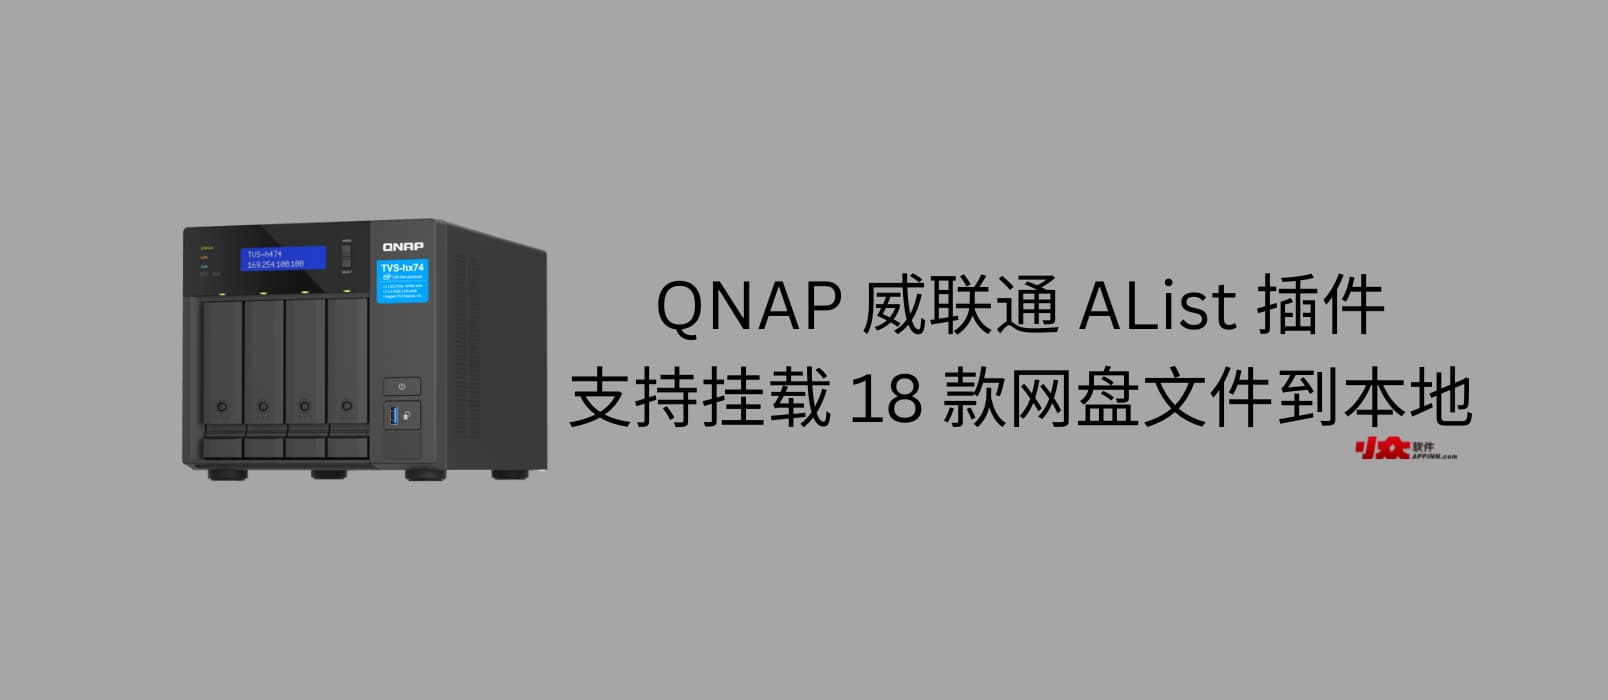 QNAP 威联通 AList 插件，支持挂载阿里云盘、百度云盘、PikPak、夸克网盘等到本地	